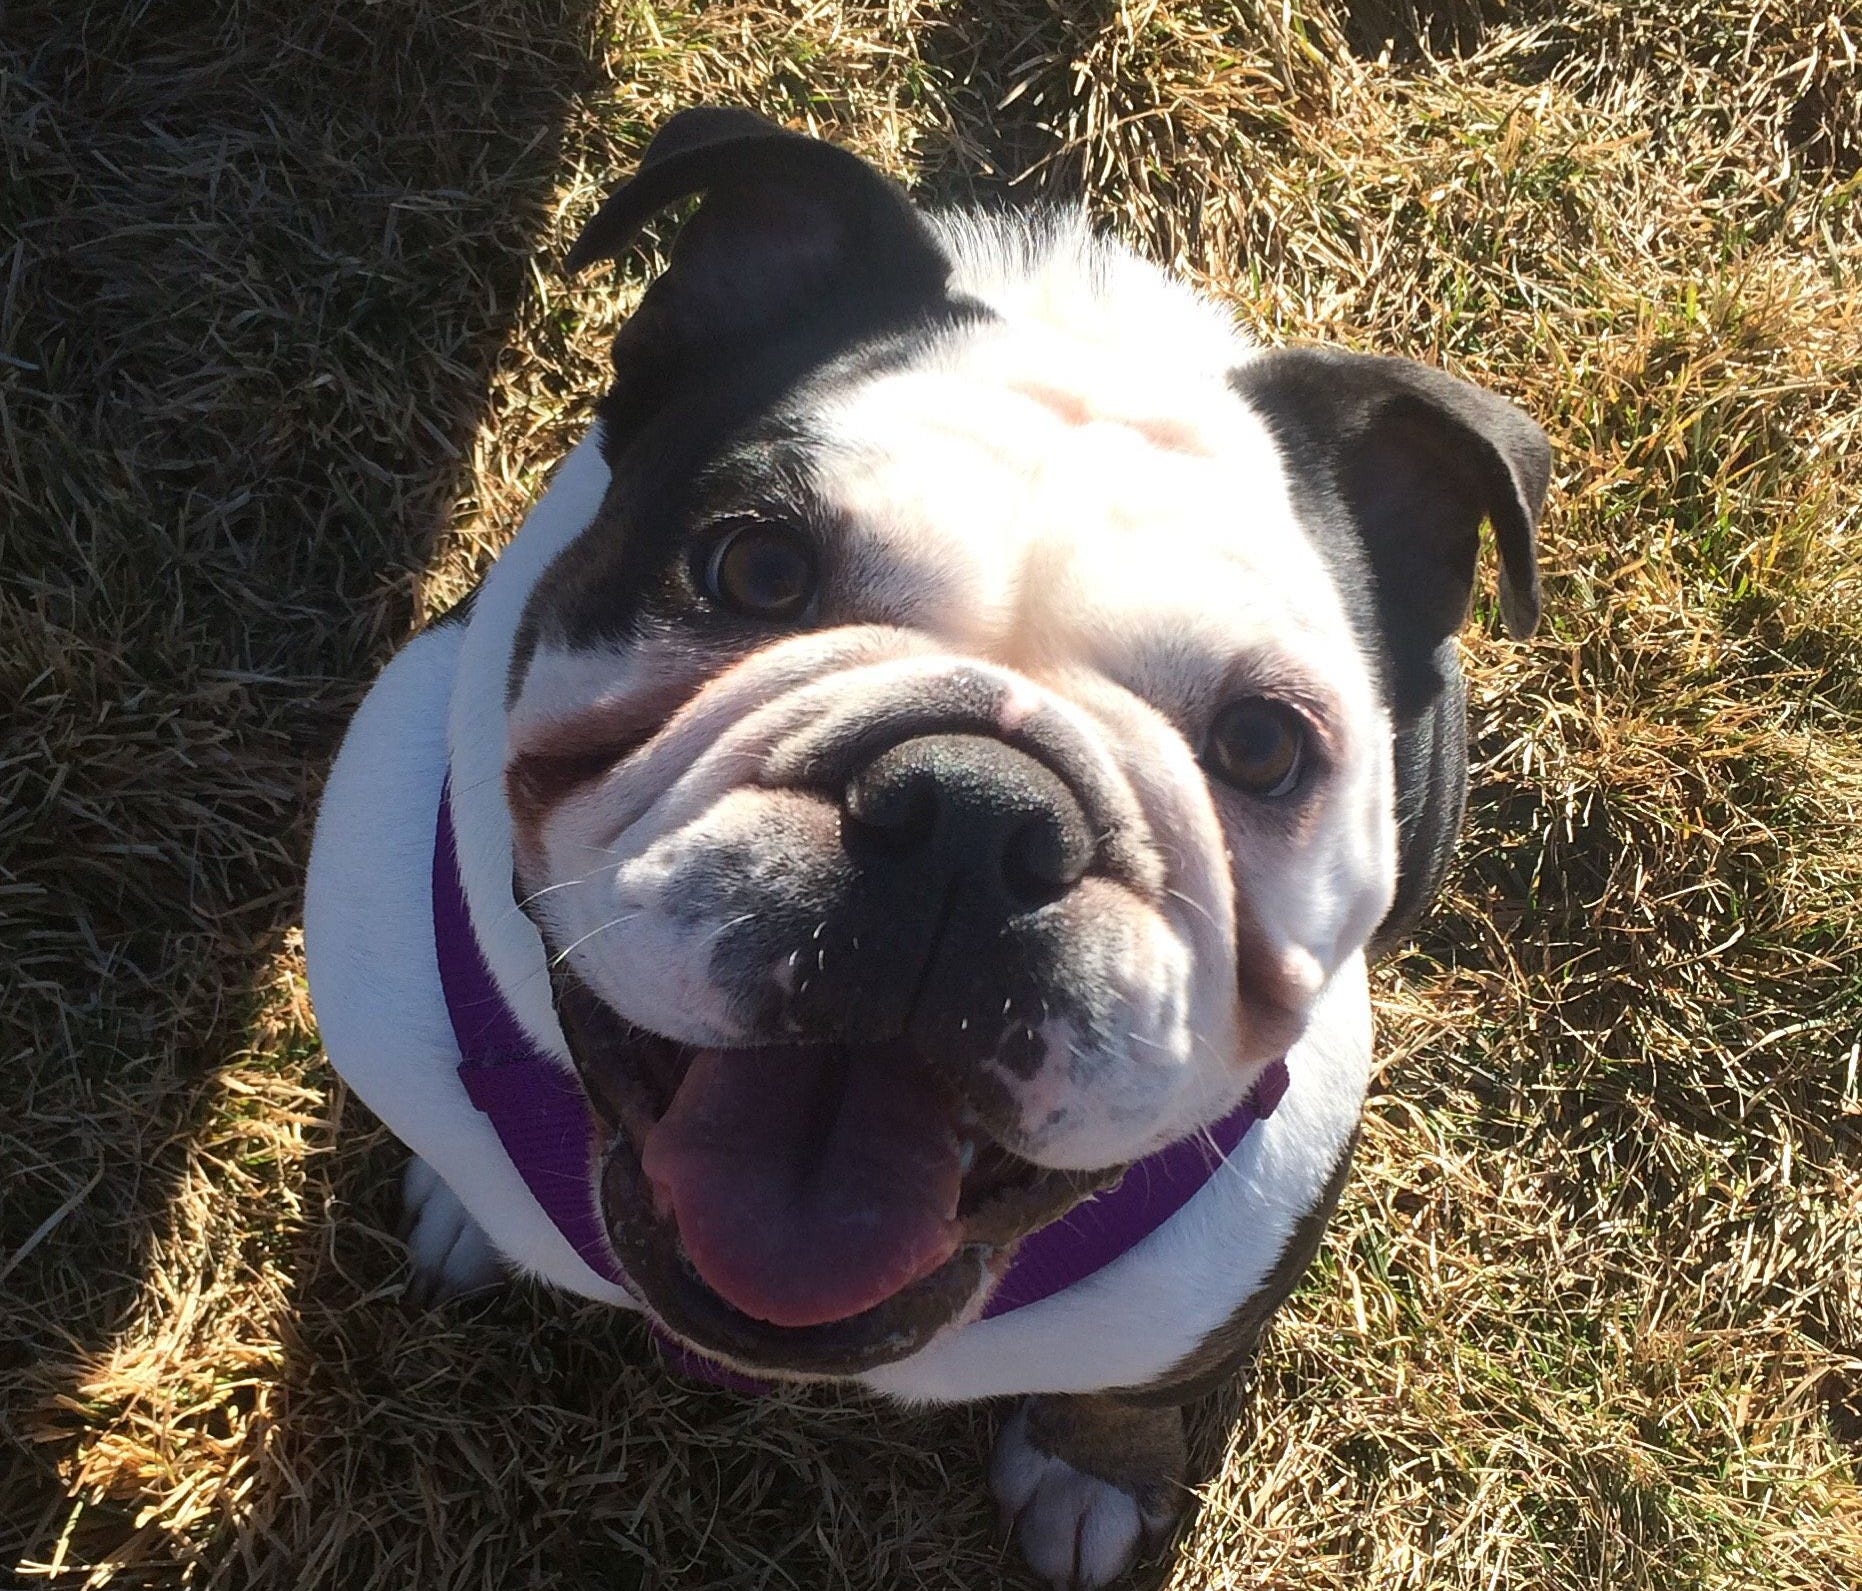 Stella the bulldog enjoying a day at the park on Jan. 18, 2016.